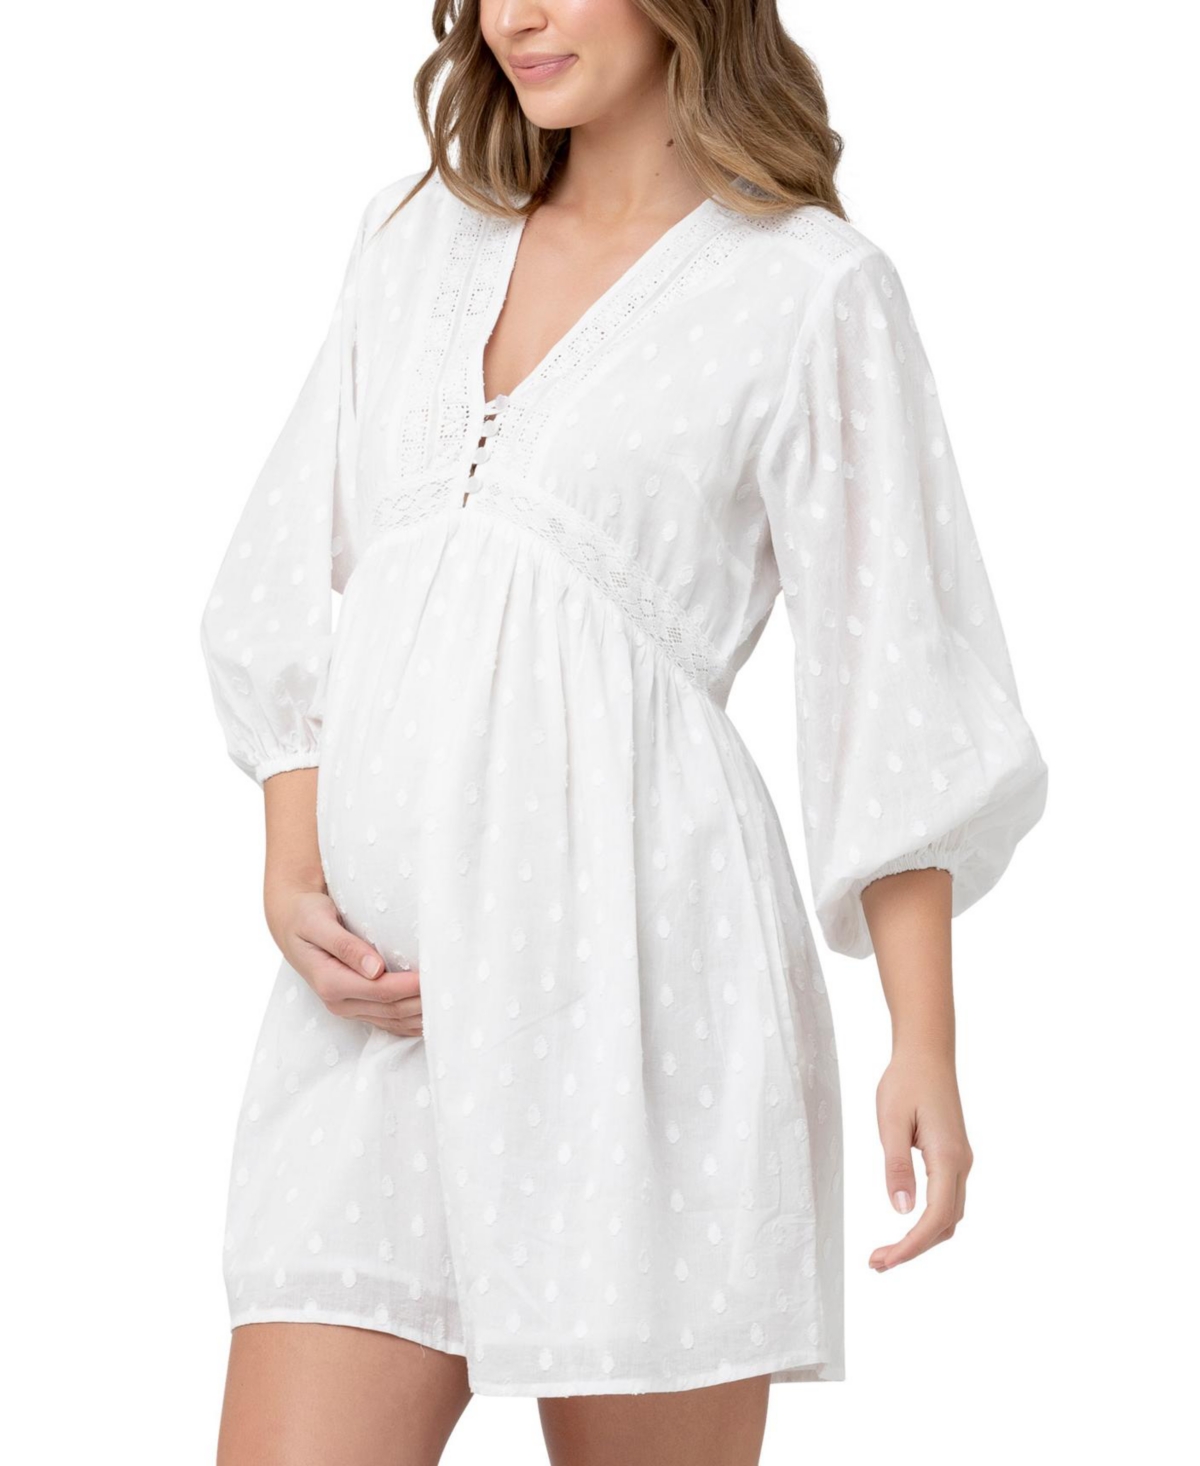 Maternity Valentina Embroidered Long Sleeve White Dress - White